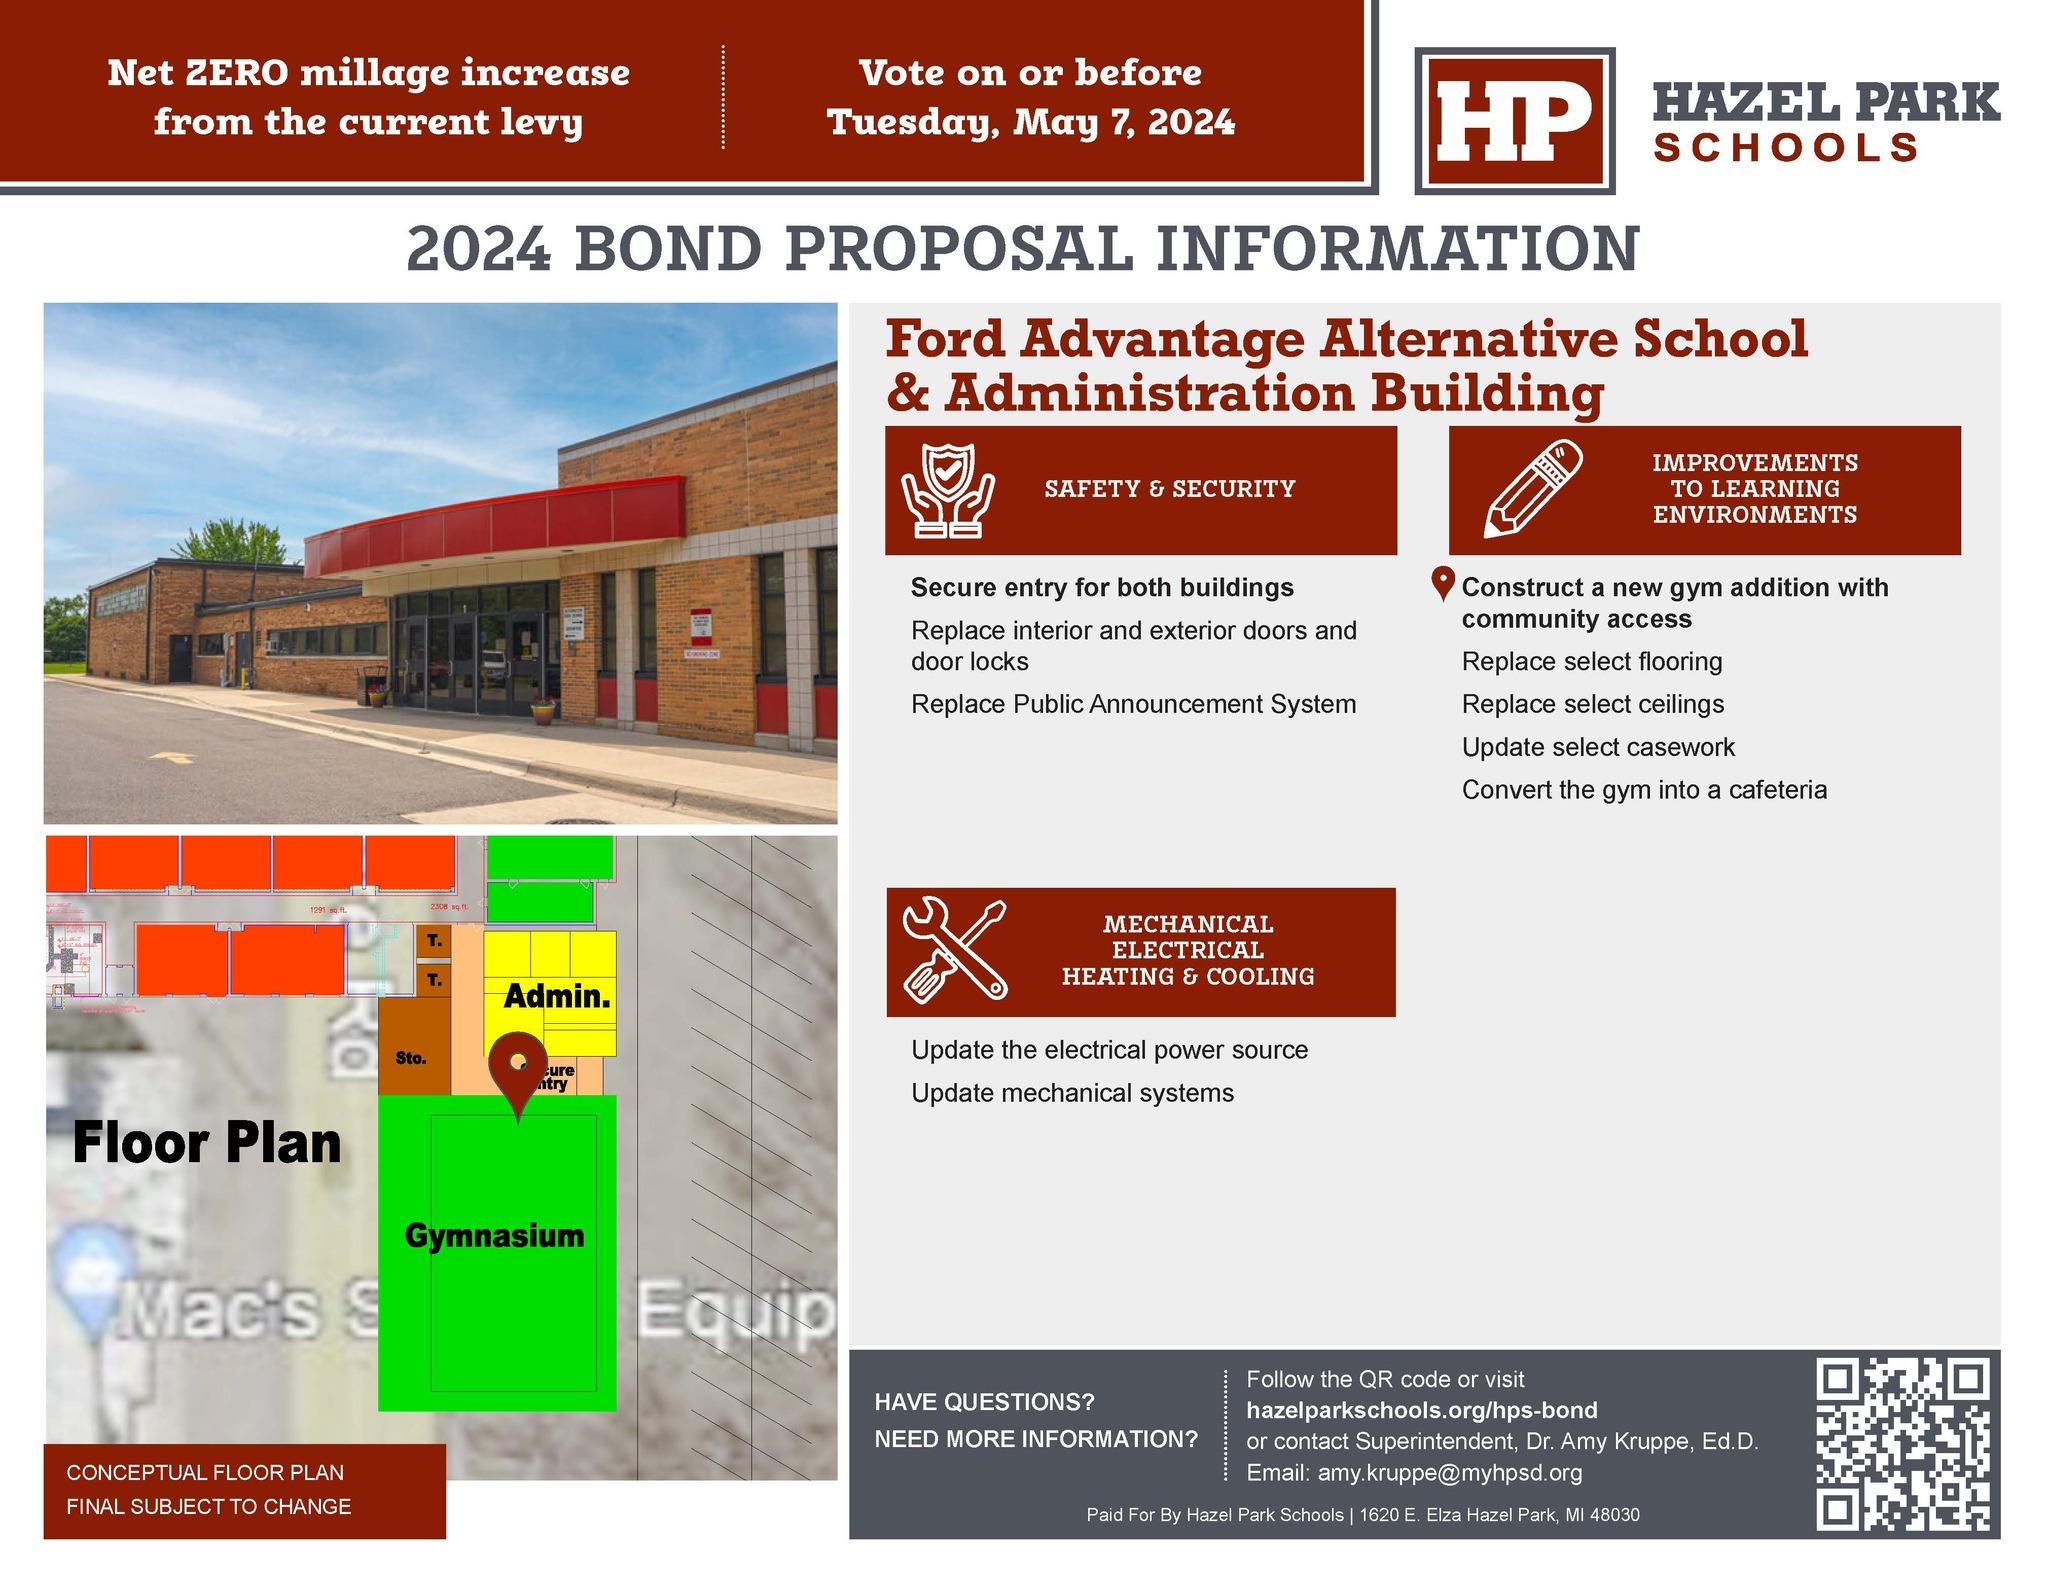 Advantage Alternative School Bond Proposal Information